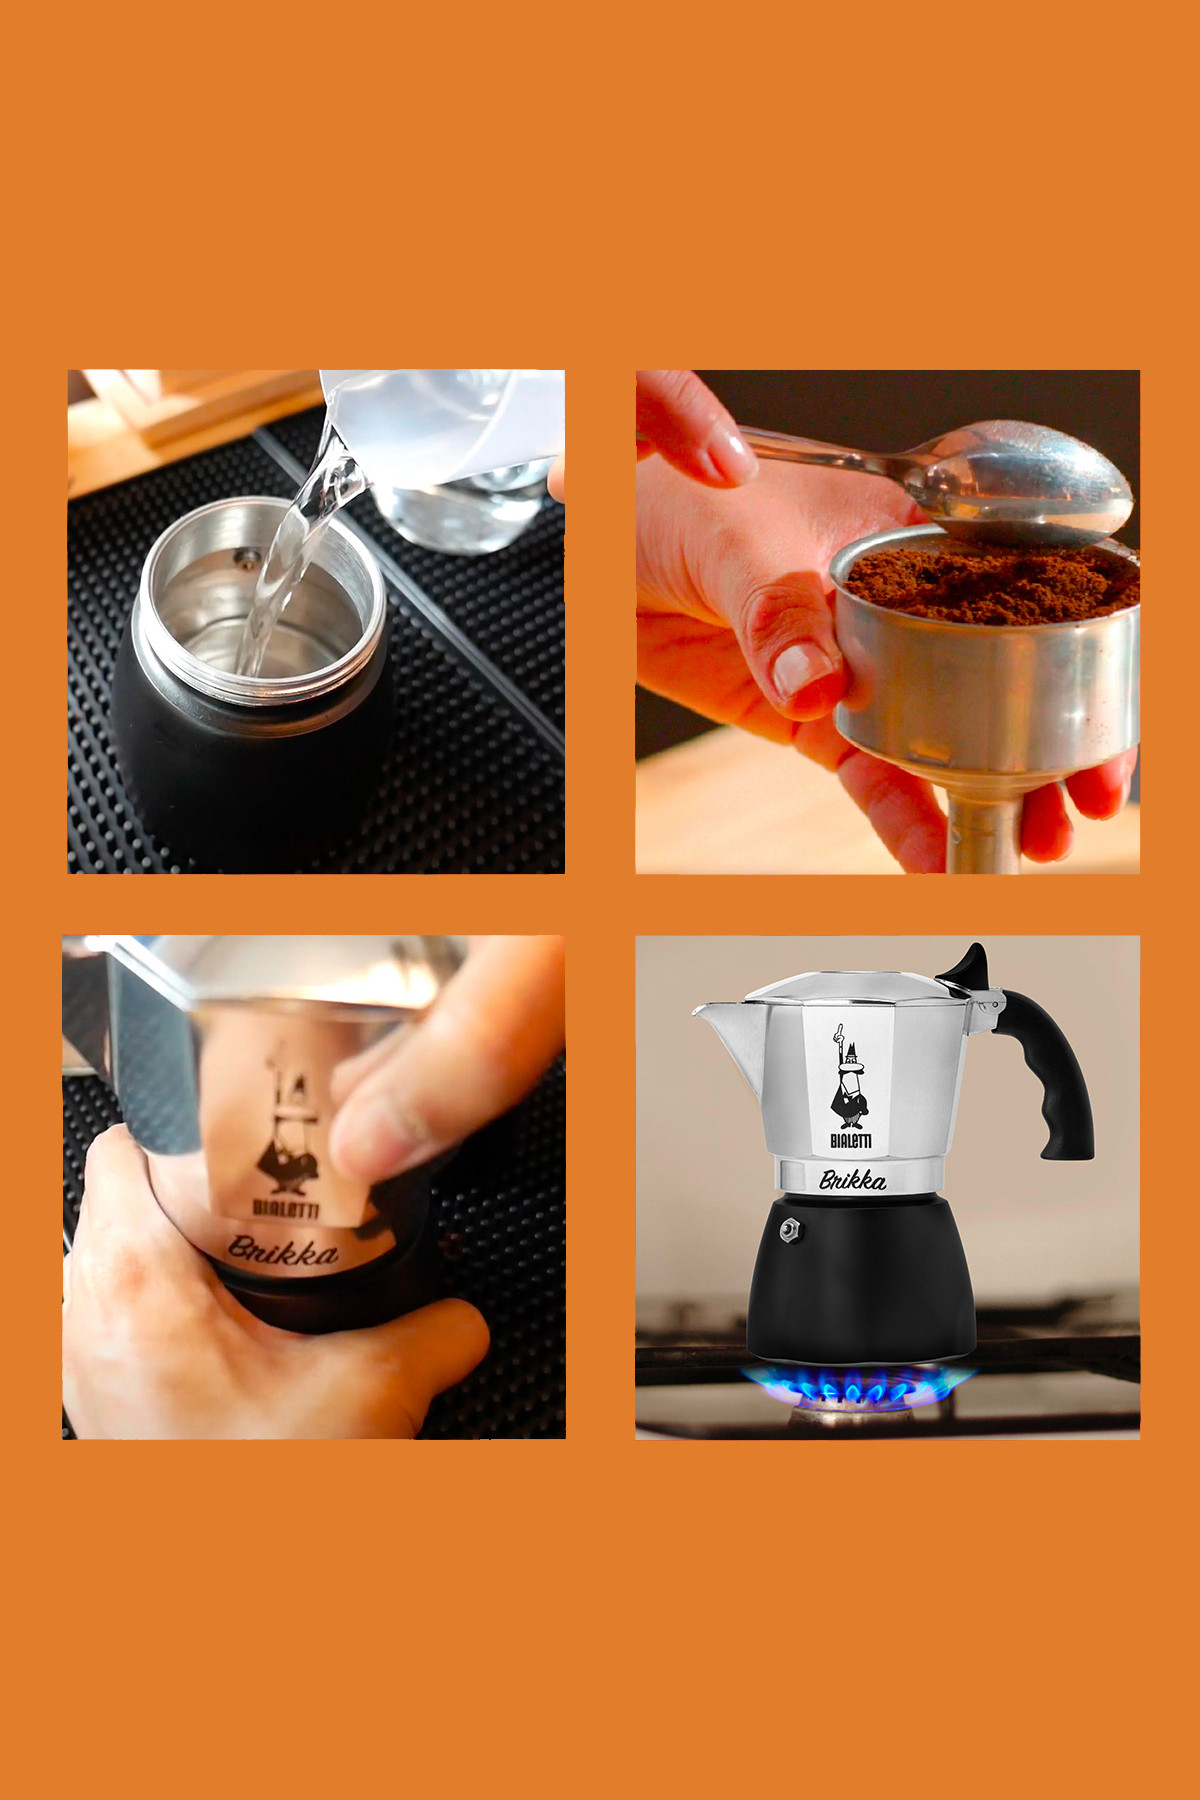 Bialetti Brikka coffee maker new valve 2020 model 2 cup 